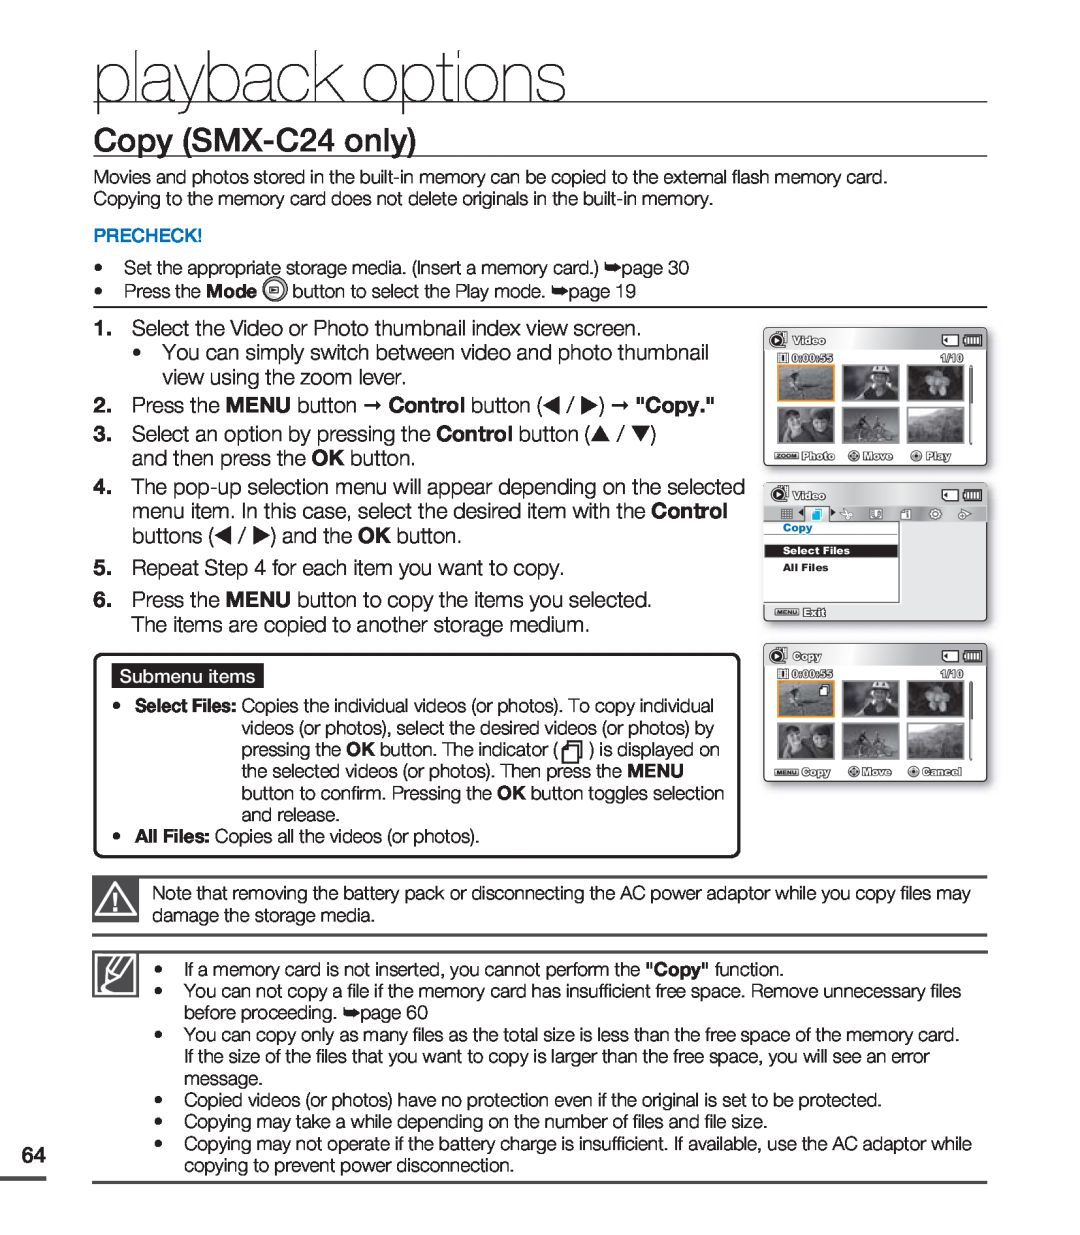 Samsung SMX-C20BP/XIL manual Copy SMX-C24 only, Press the MENU button Control button / Copy, playback options, Precheck 